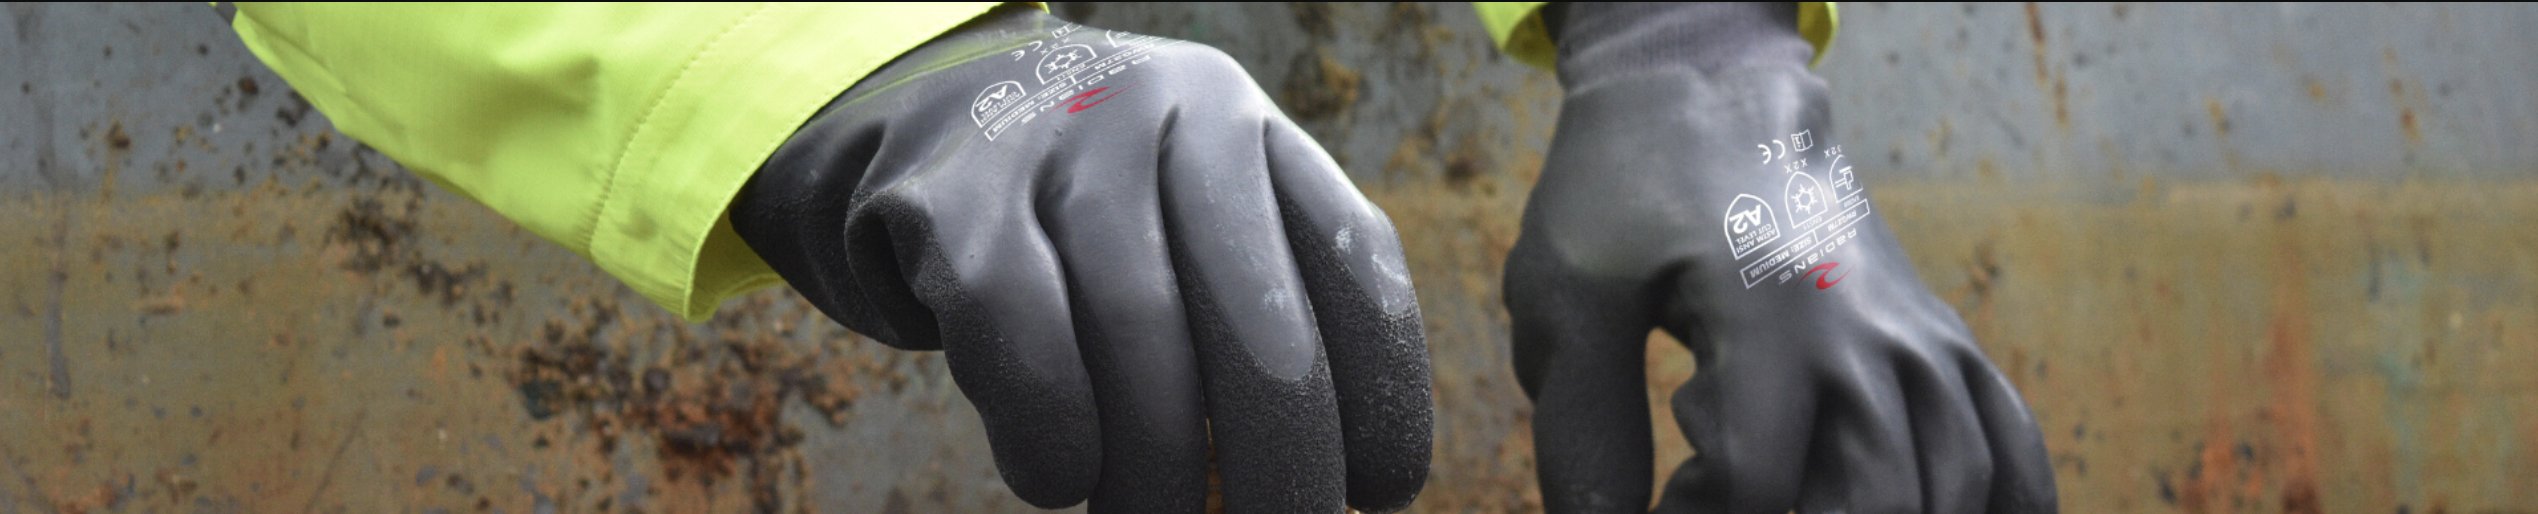 Construction Gloves | WRYKER Construction Supply